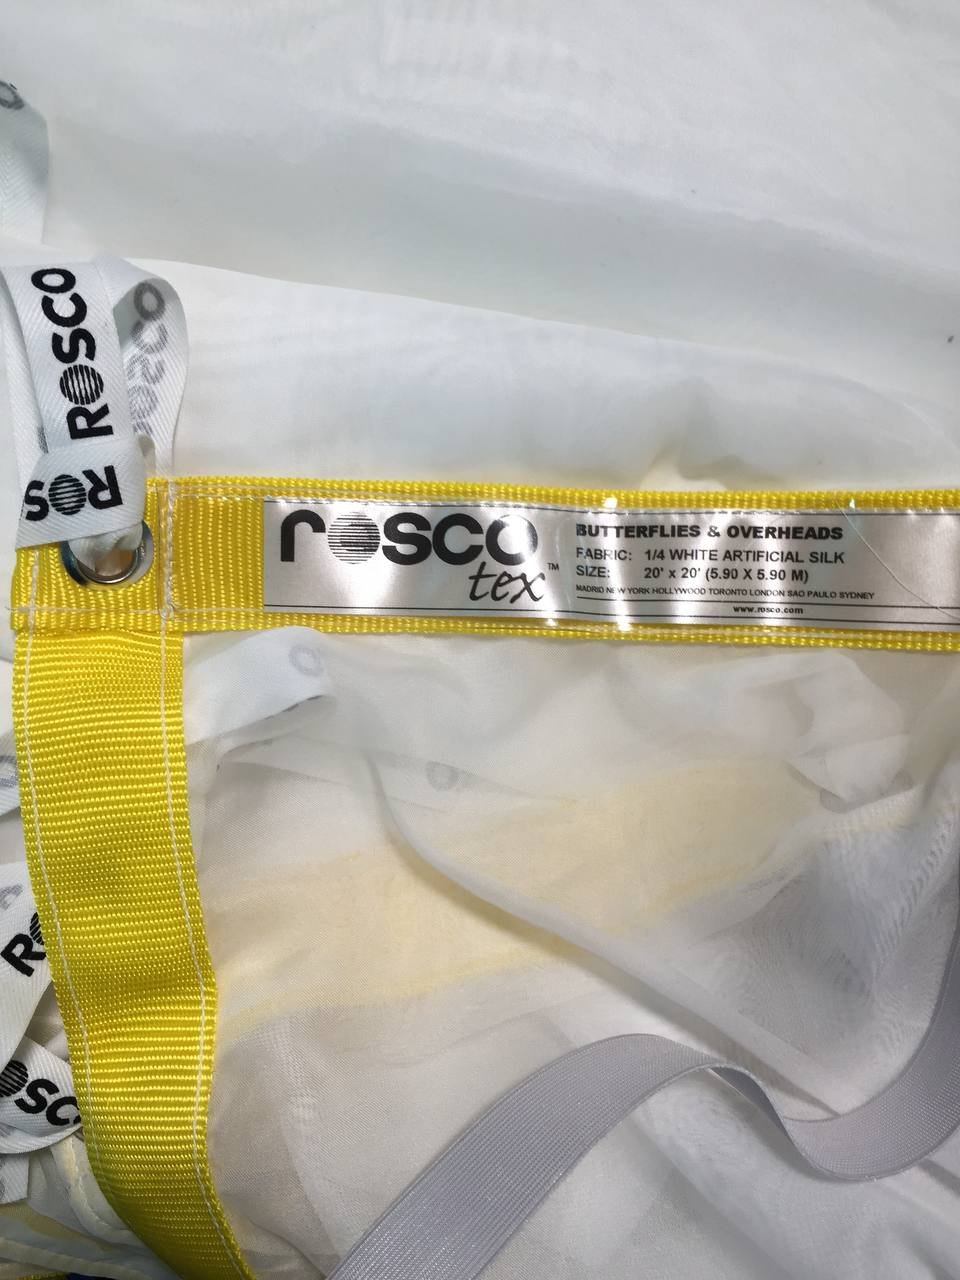 Рассеиватель Rosco 1/4 WHITE ARTIFICIAL SILK 5,90X5,90M (20'X20')